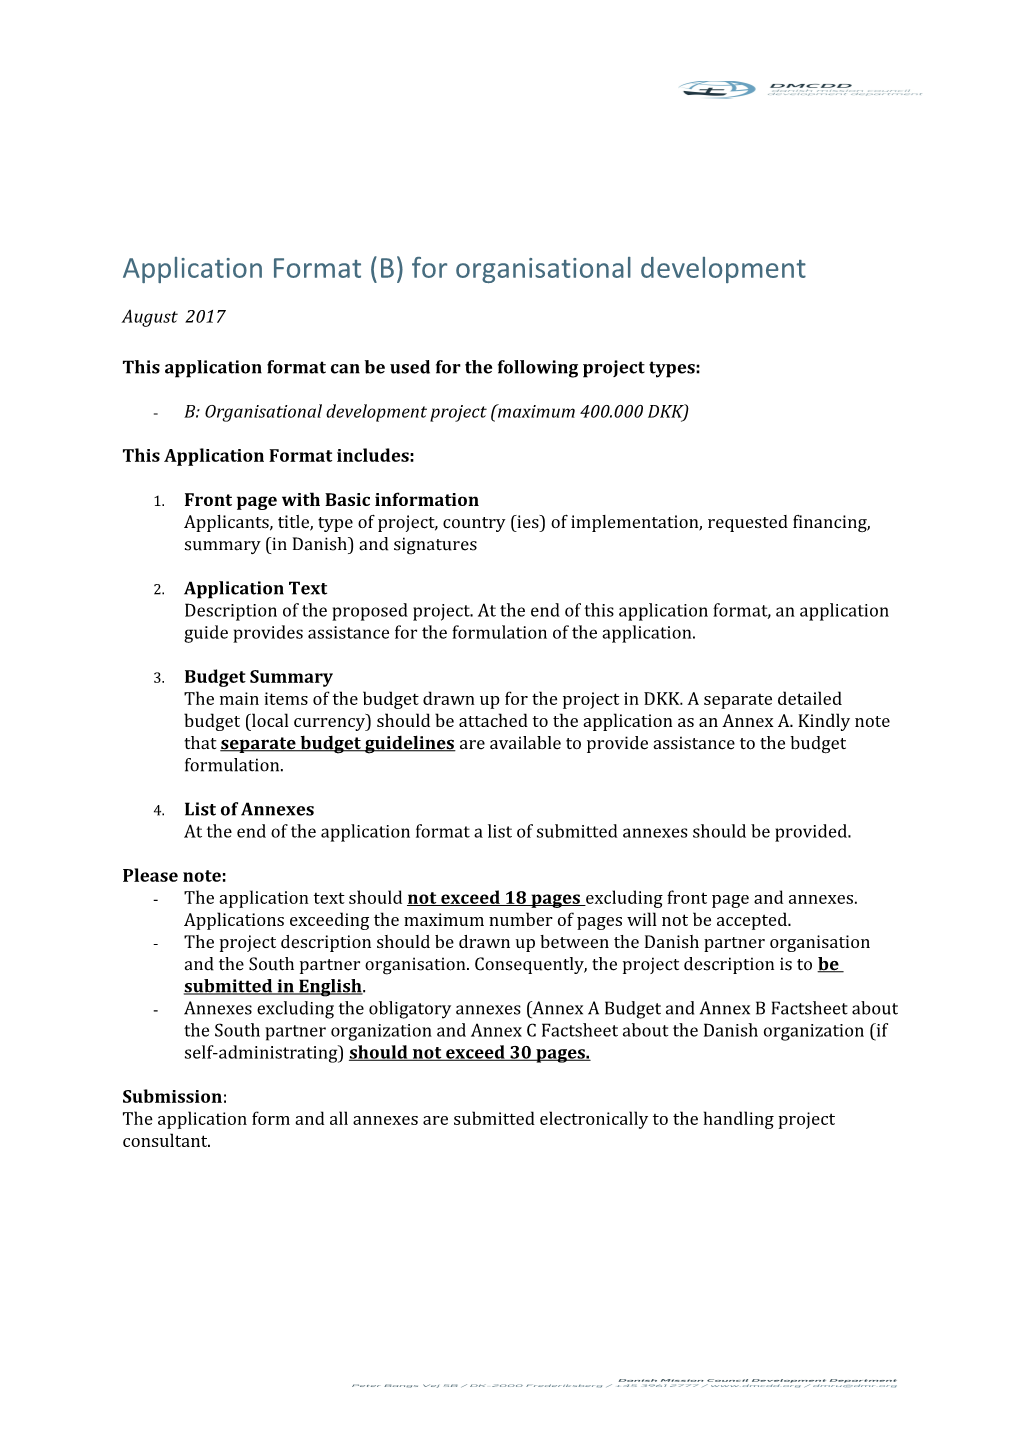 Application Format (B) for Organisationaldevelopment